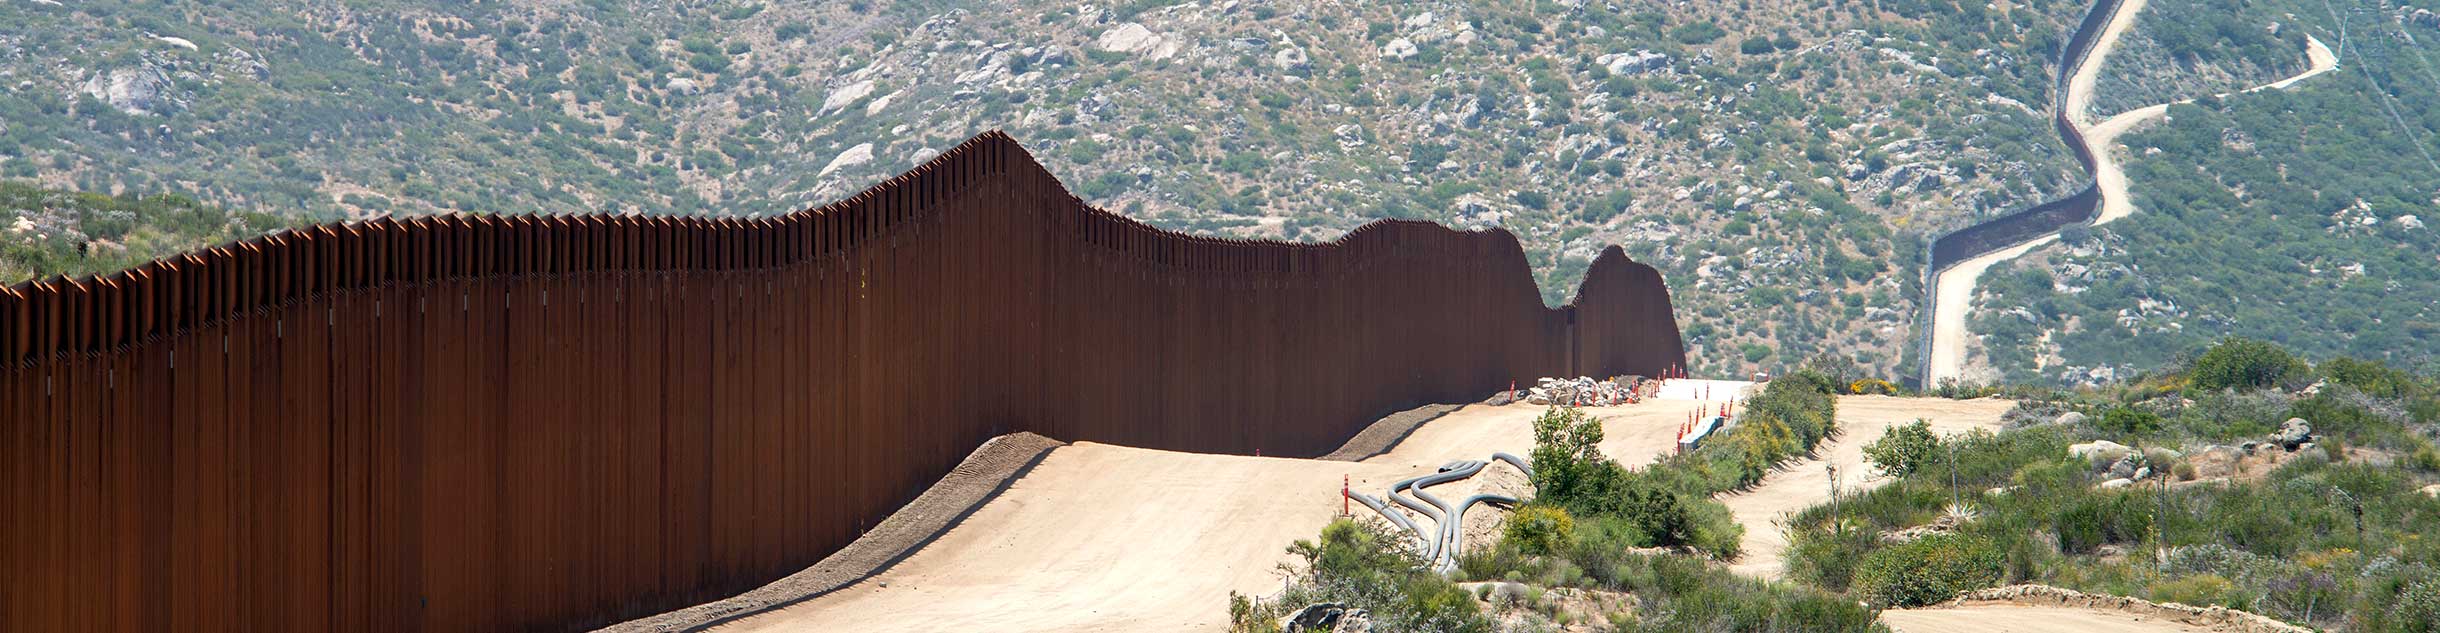 Border Patrol fence